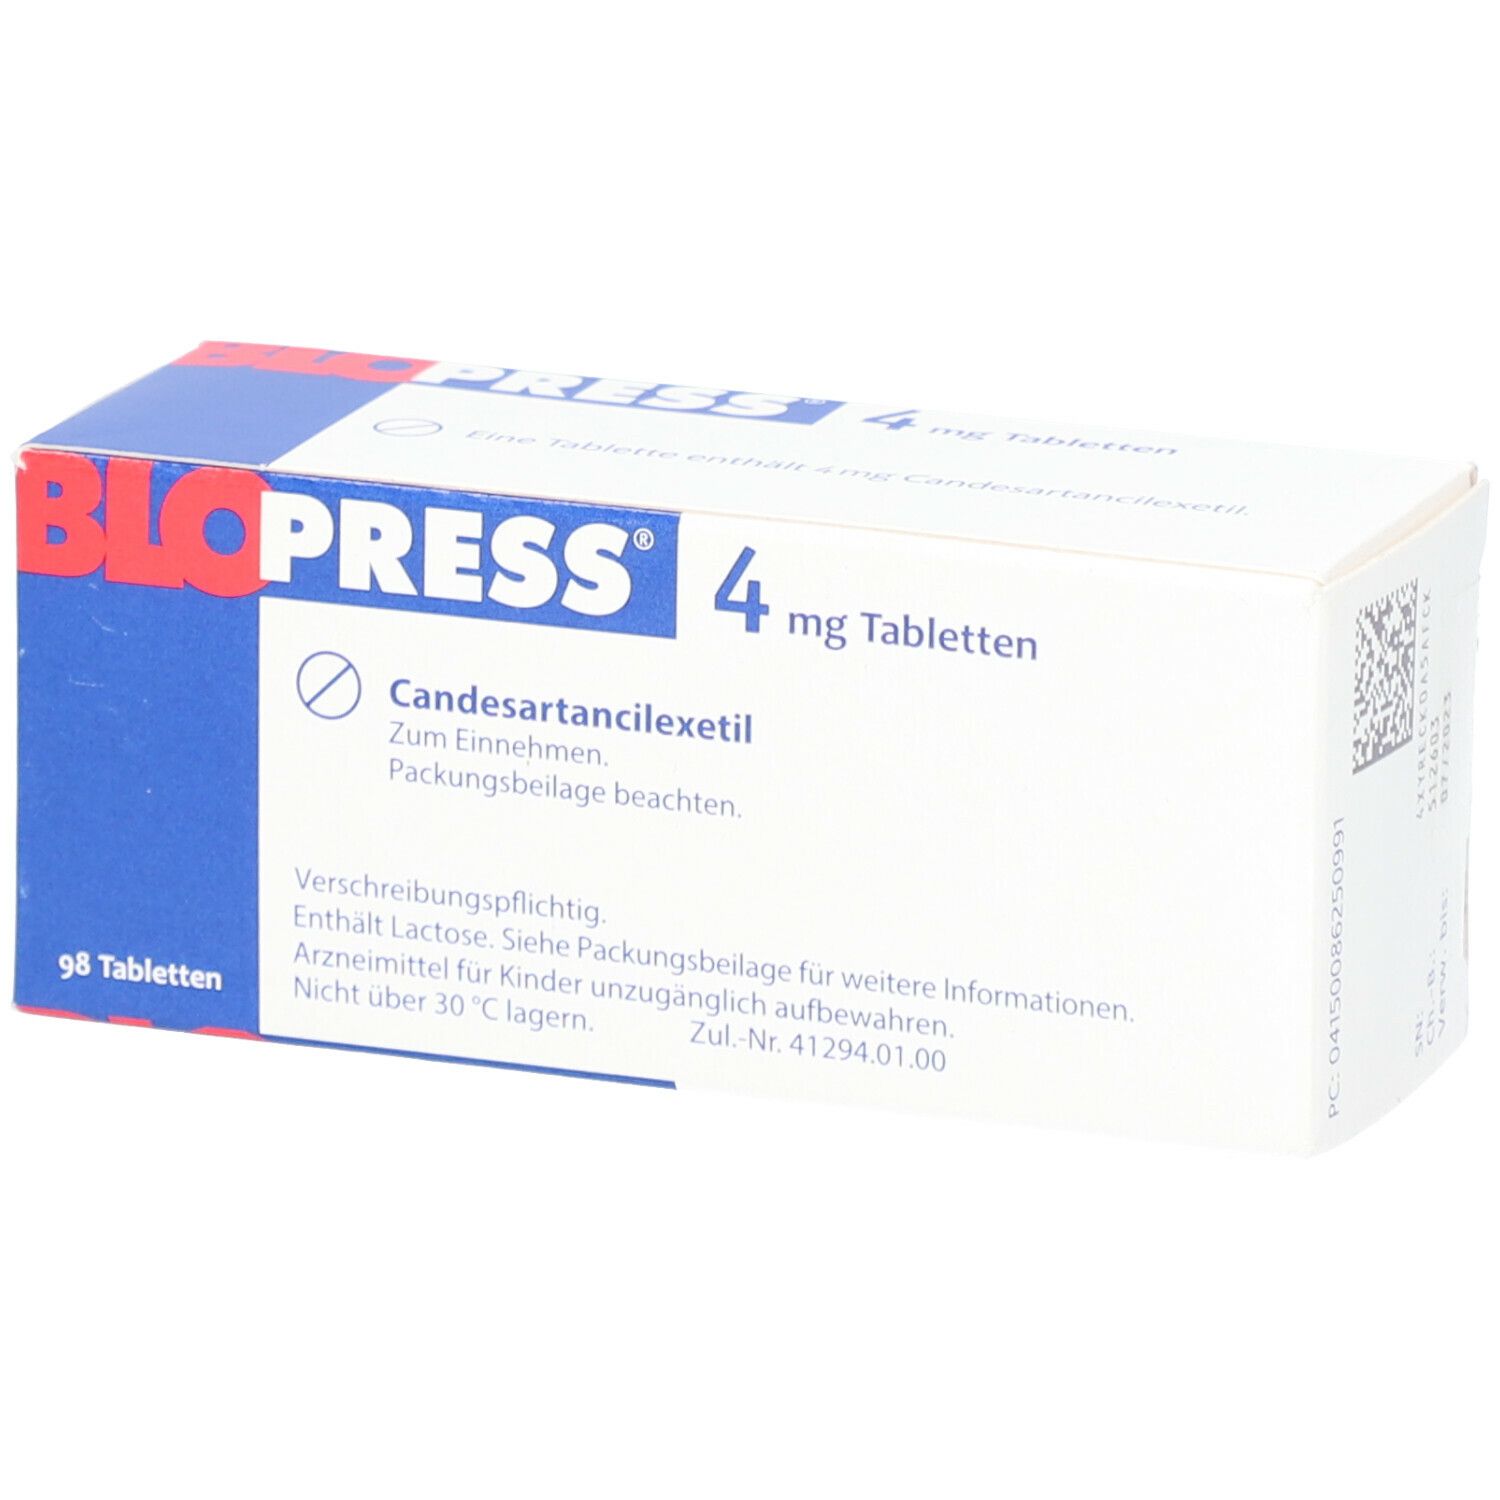 Blopress® 4 mg